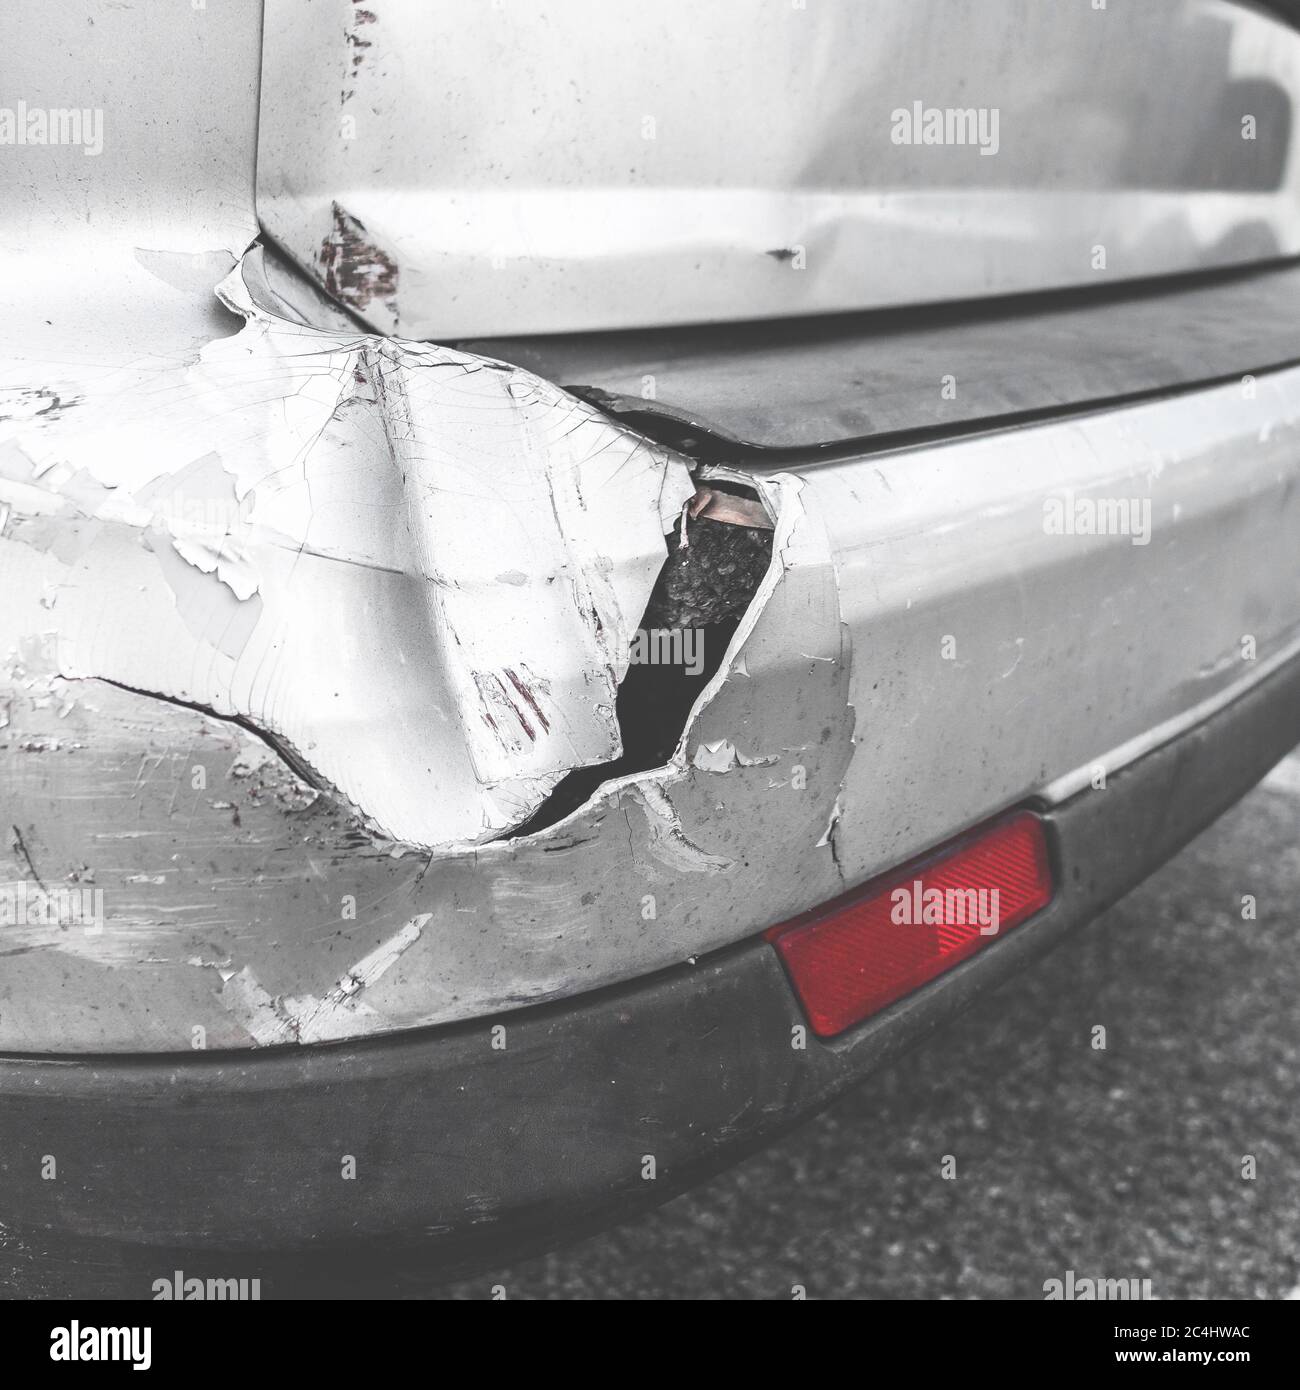 Dented car. Vehicle bumper dent broken by car crash. Road accidents. Stock Photo